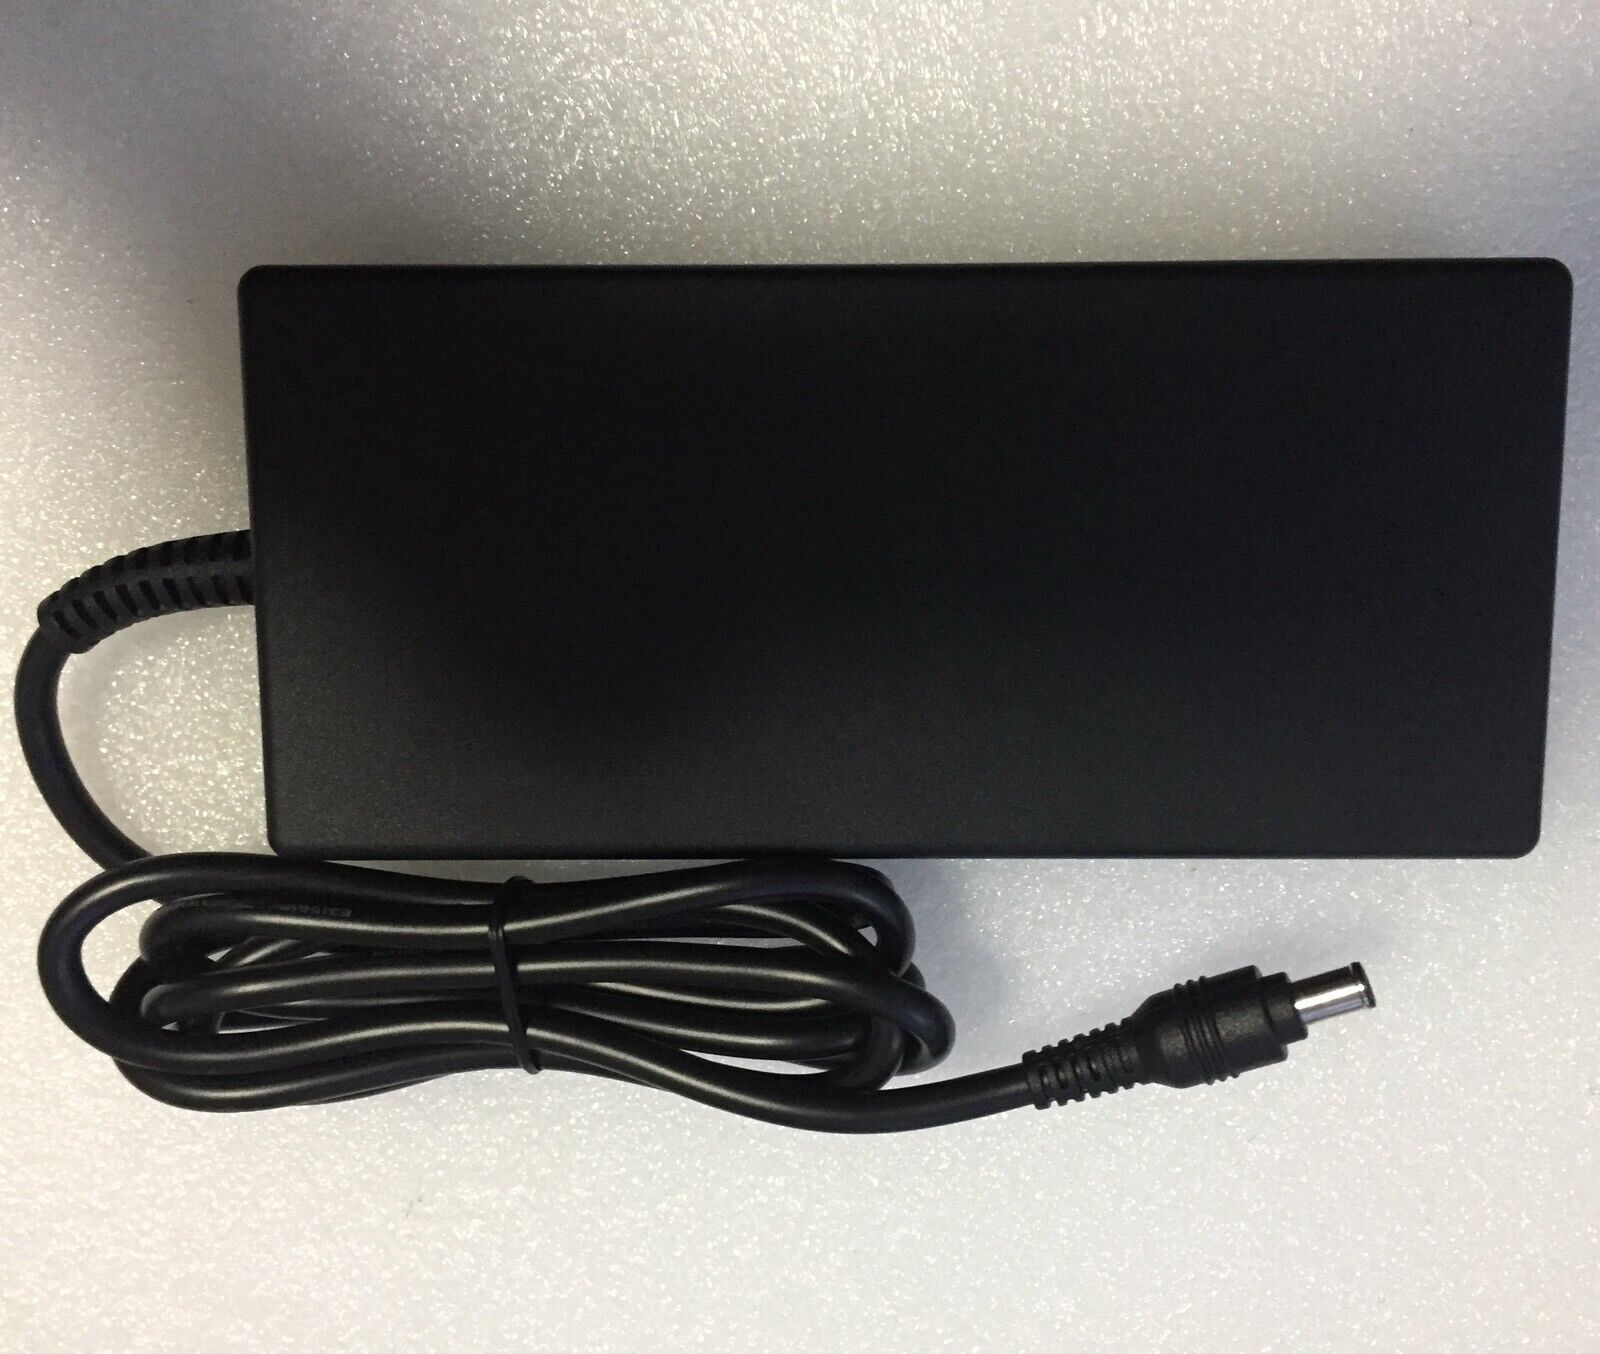 New Original LG 19.5V AC Adapter for LG 45GR95QE UltraGear Curved Gaming Monitor